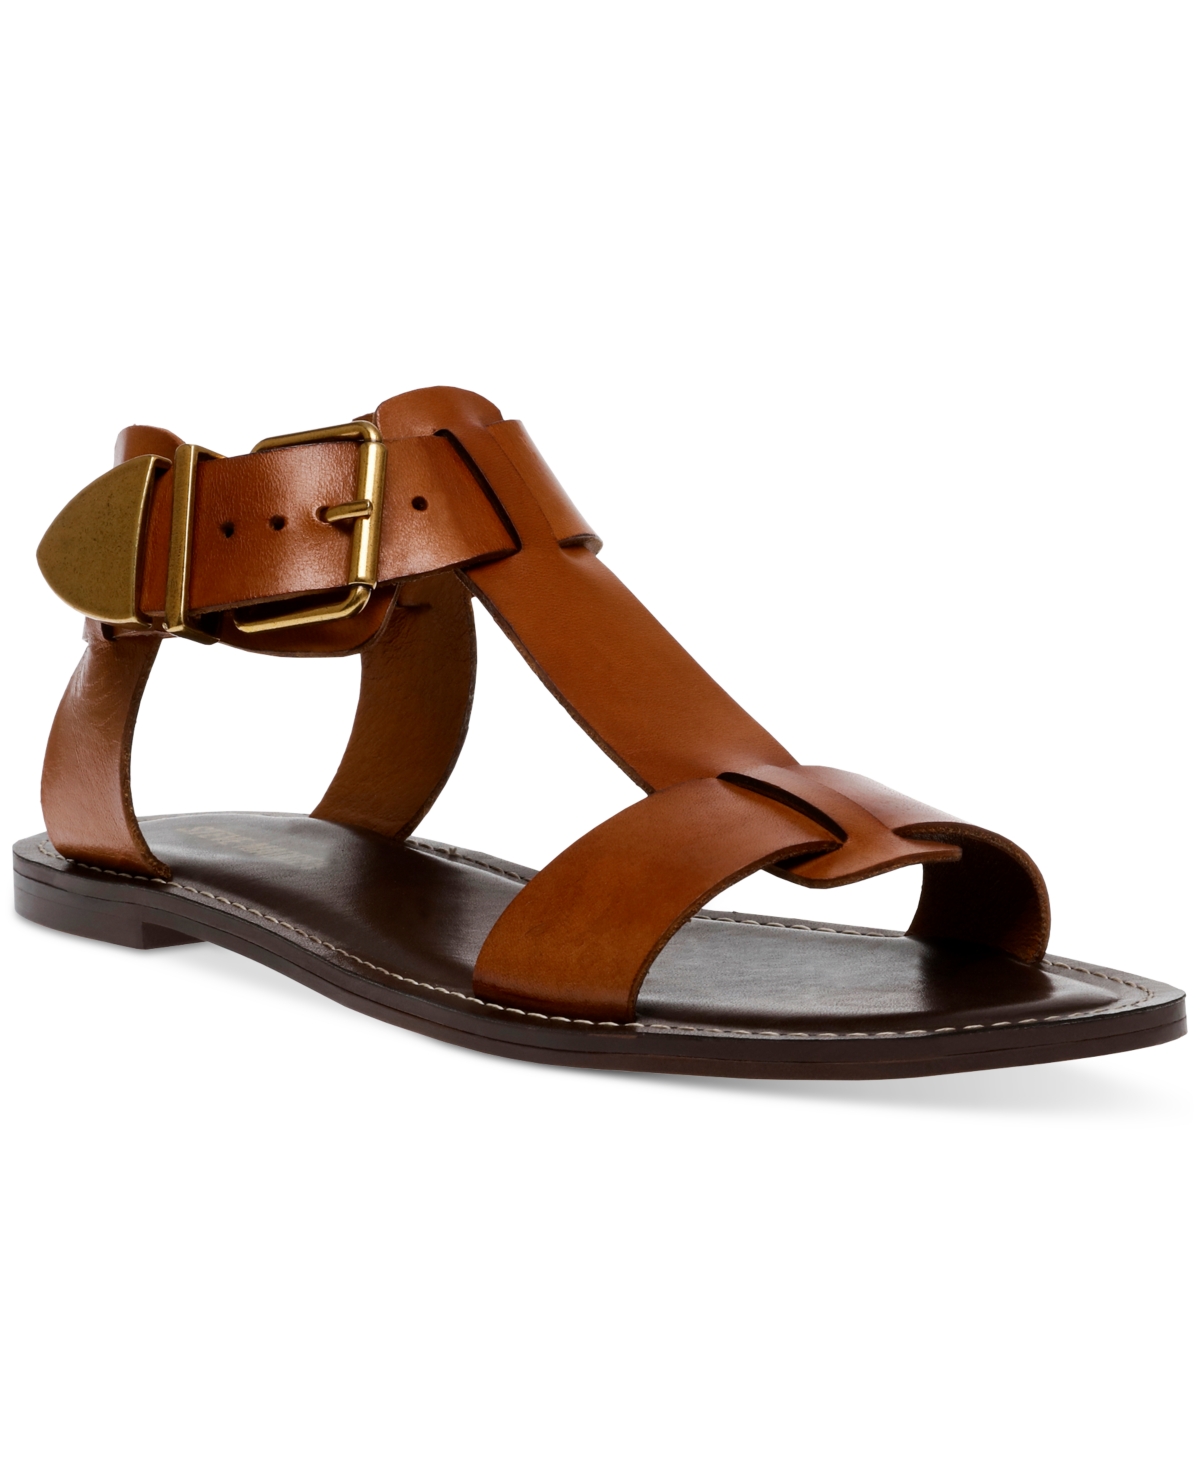 Women's Brazinn Gladiator Flat Sandals - Tan Leather